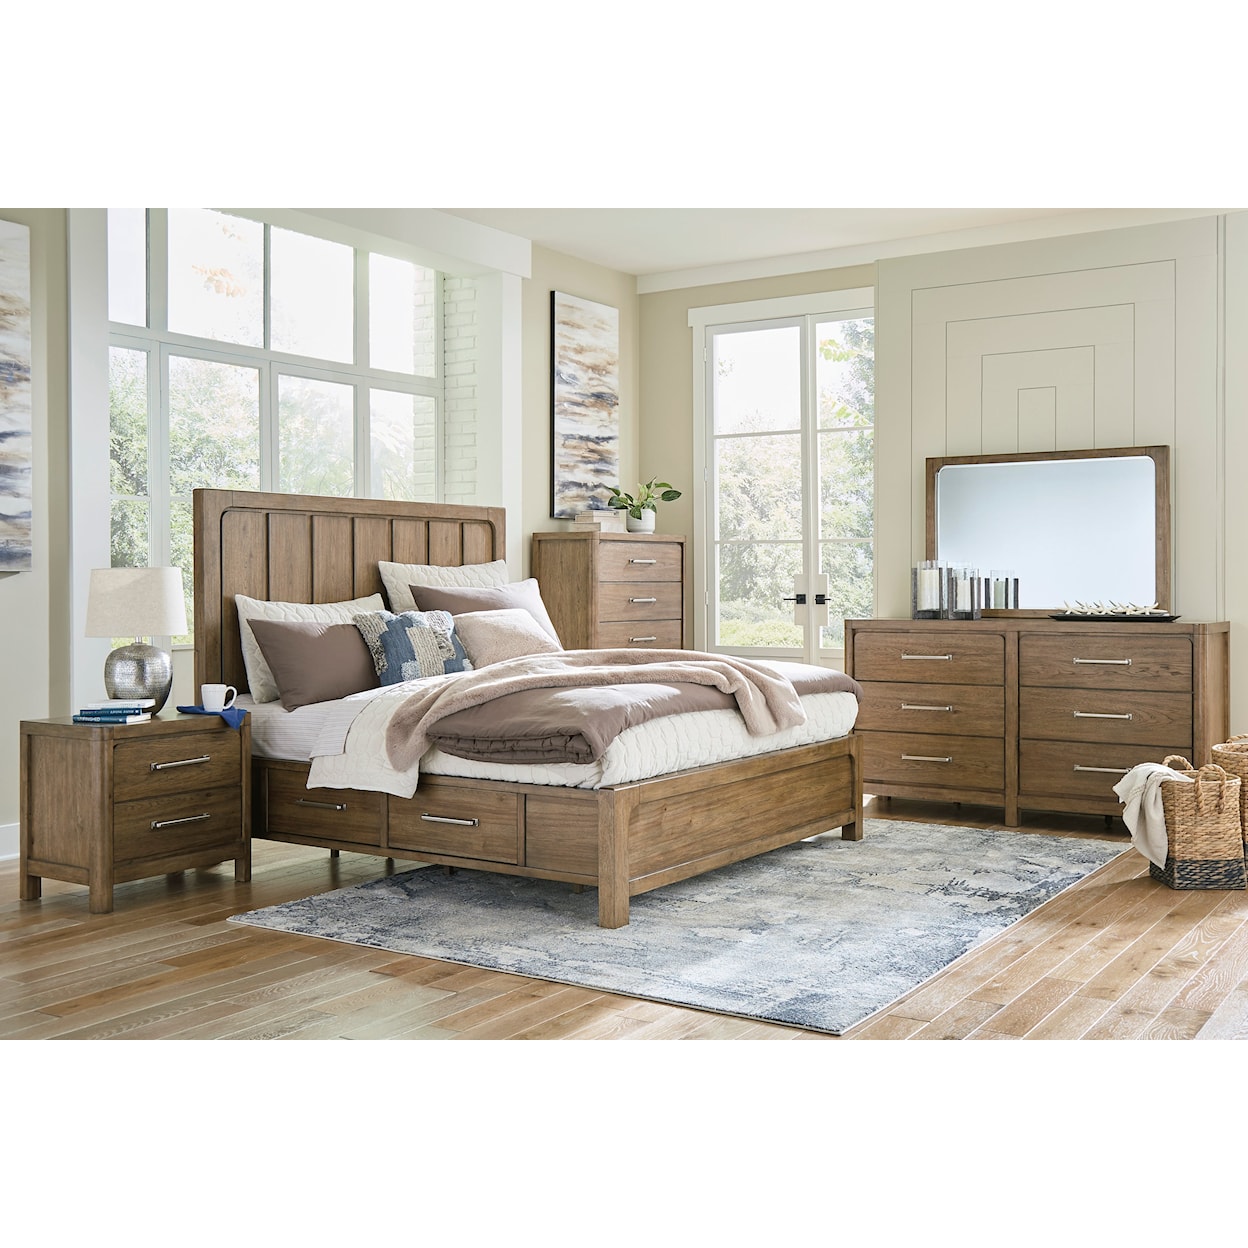 Ashley Furniture Signature Design Cabalynn 5-Piece Queen Bedroom Set